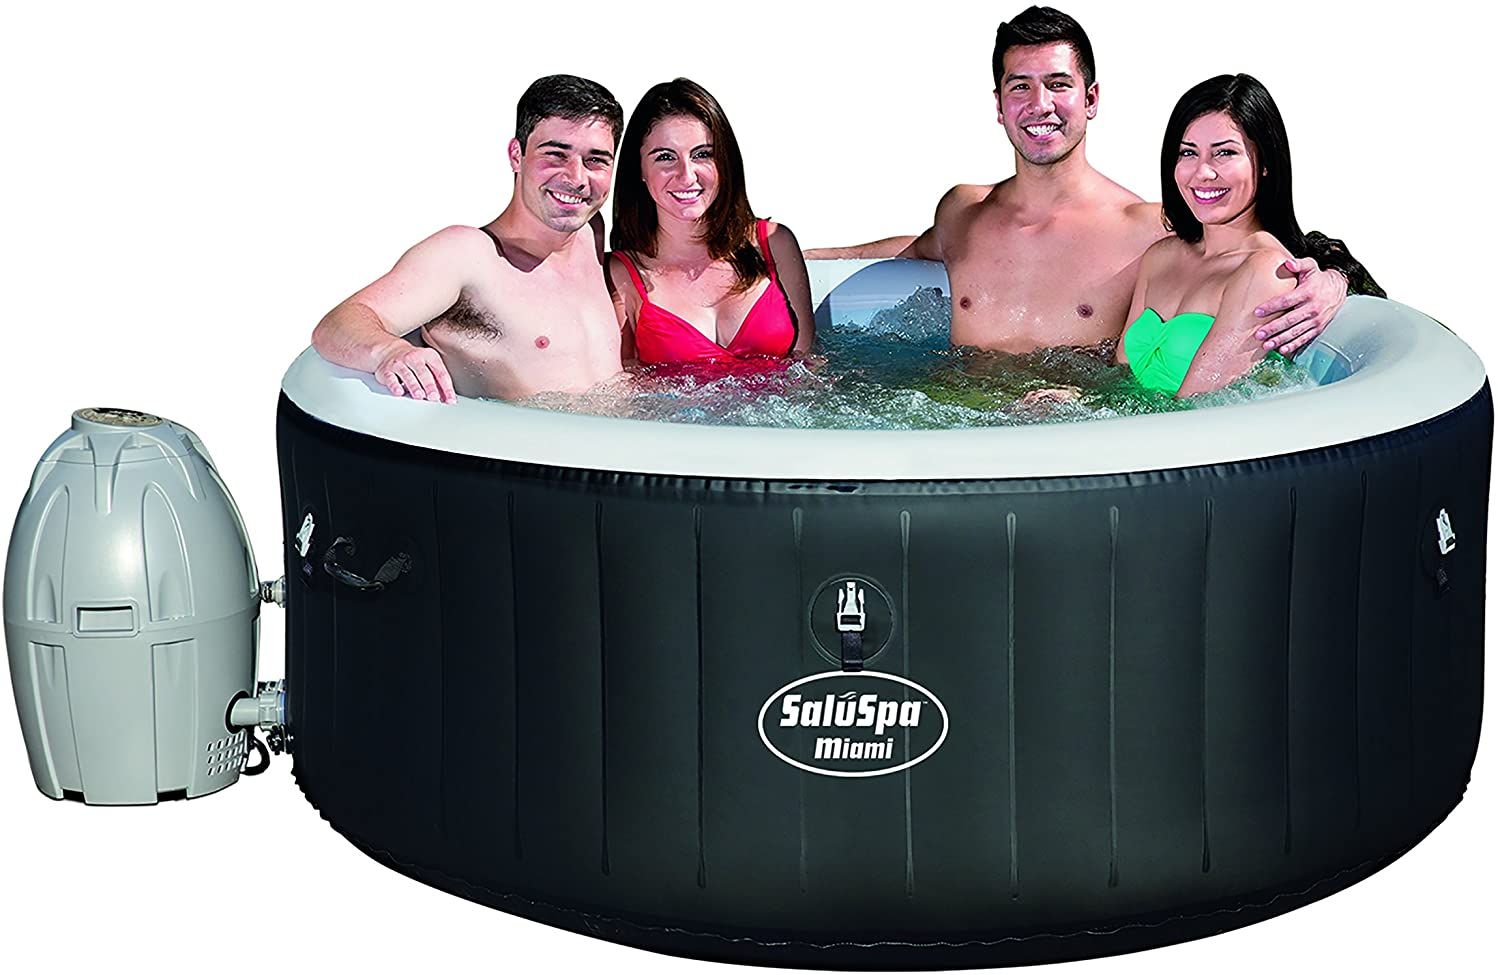 Bestway SaluSpa Miami Inflatable Hot Tub - $$title$$